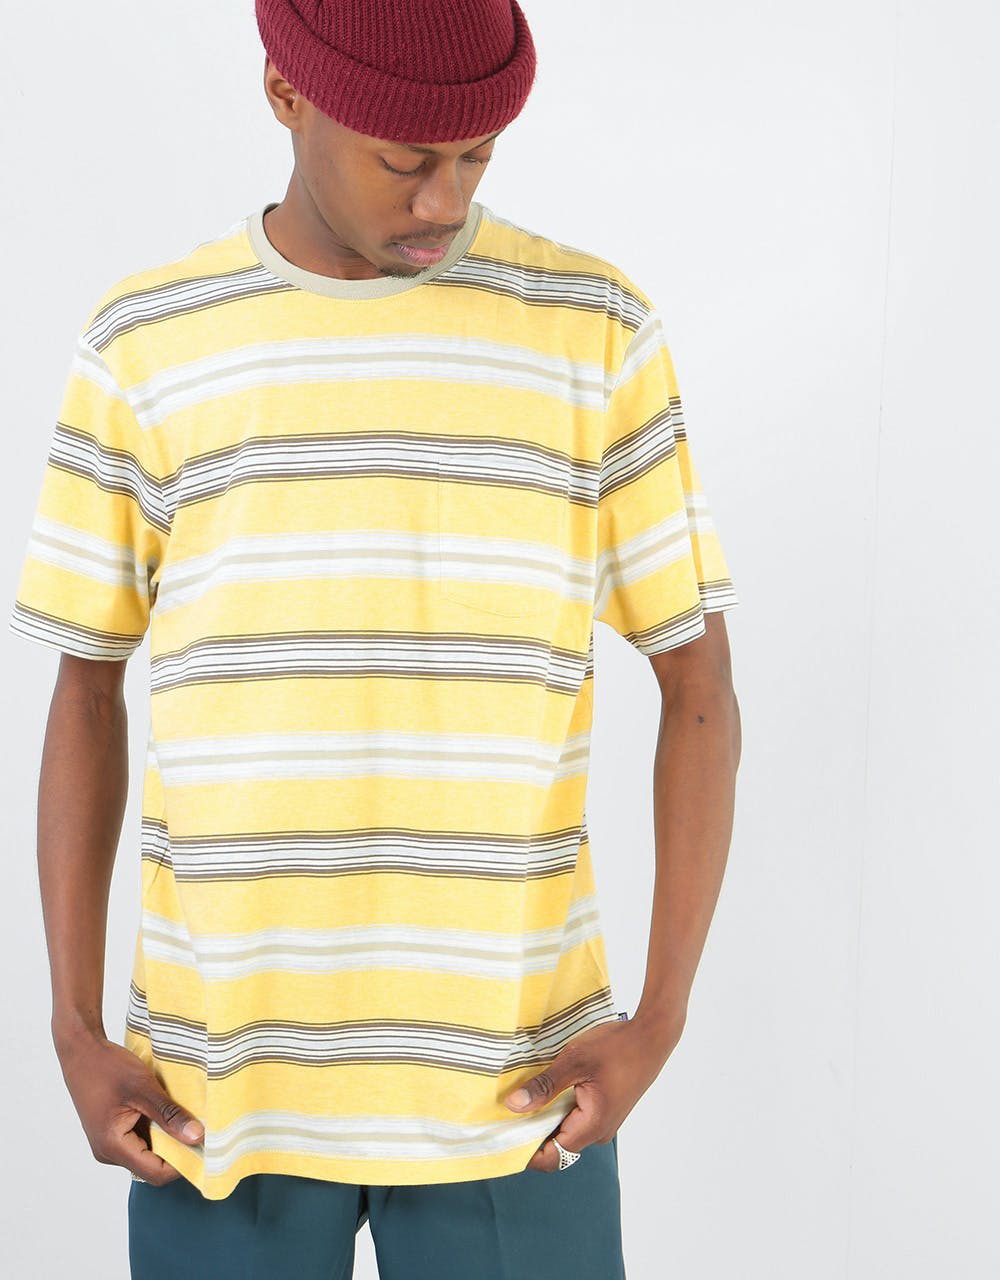 Patagonia Squeaky Clean Pocket T-Shirt - Tarkine Stripe: Surfboard Yellow